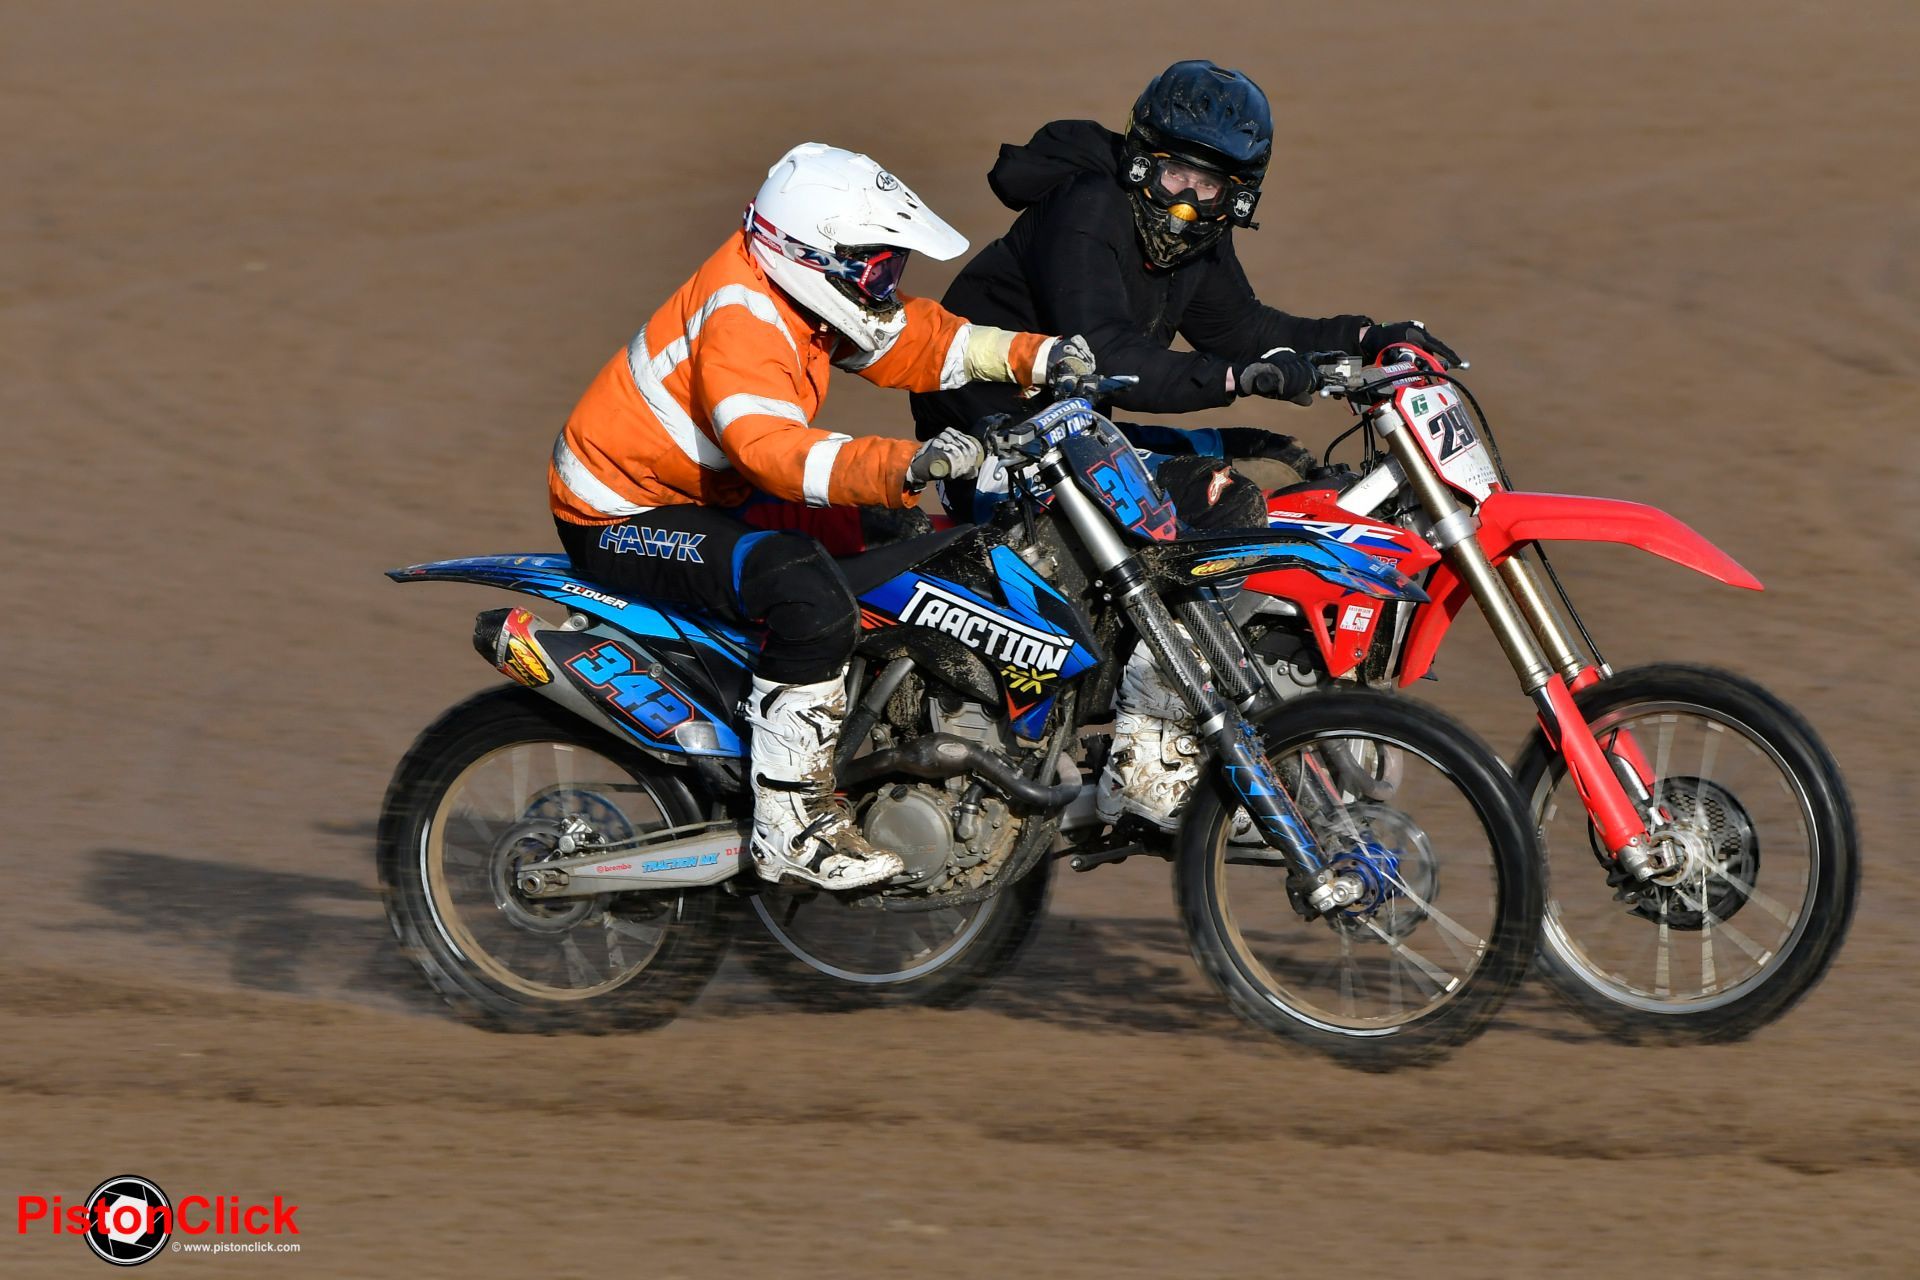 Mablethorpe Motorcycle Sand Racing